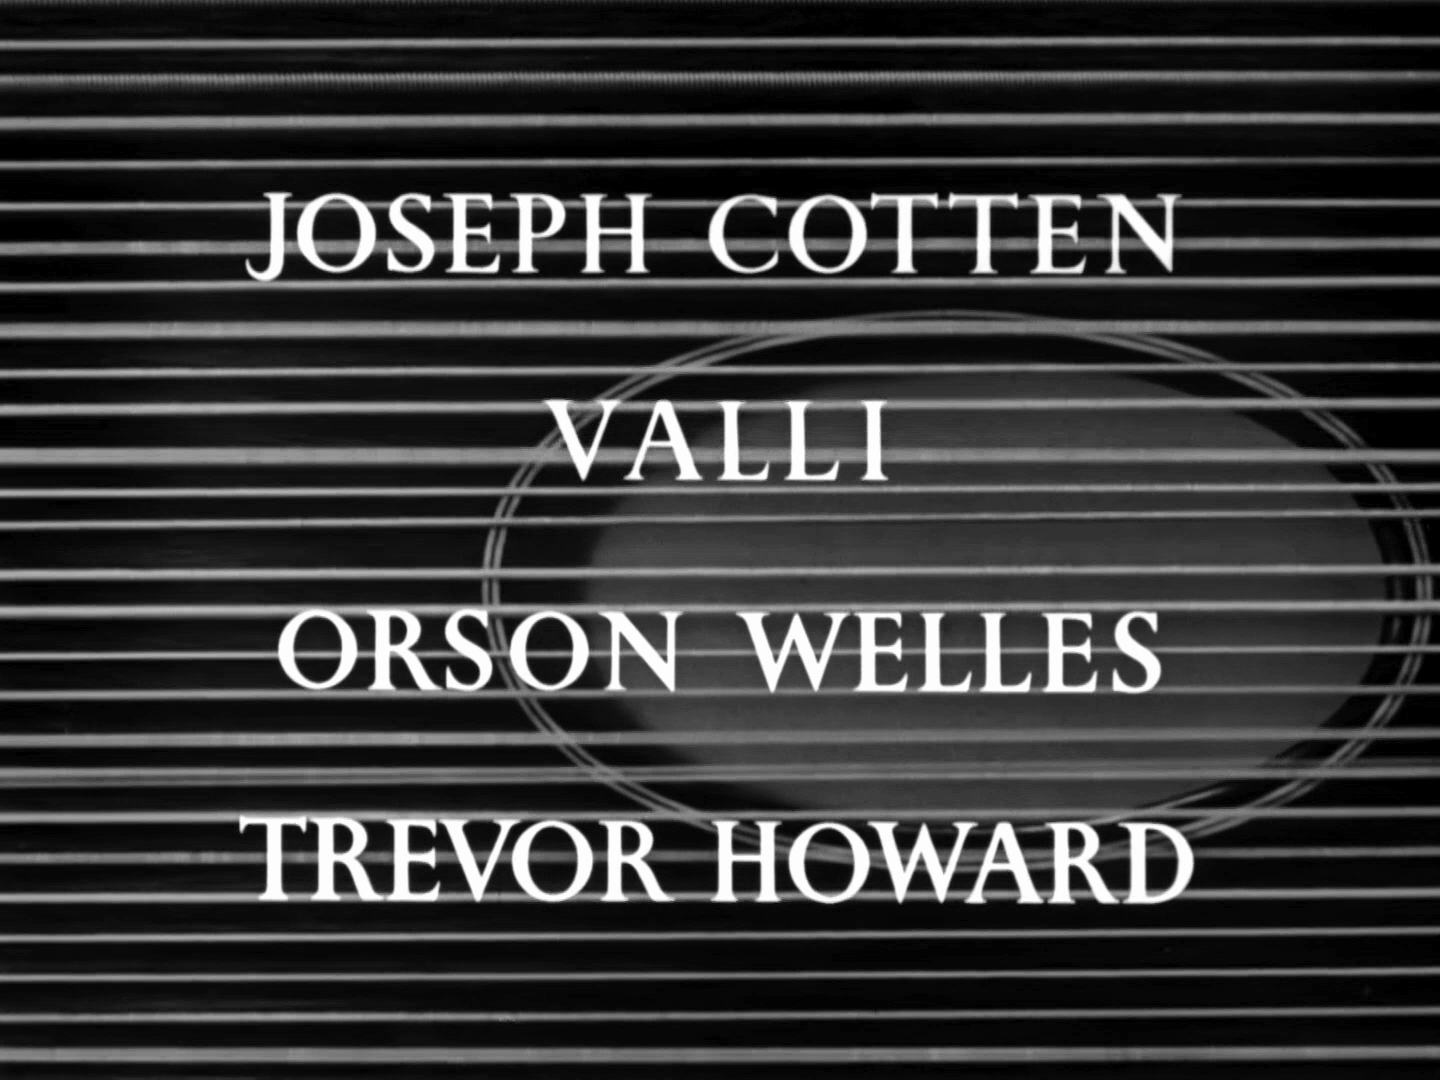 Main title from The Third Man (1949) (3). Joseph Cotten, Valli, Orson Welles, Trevor Howard